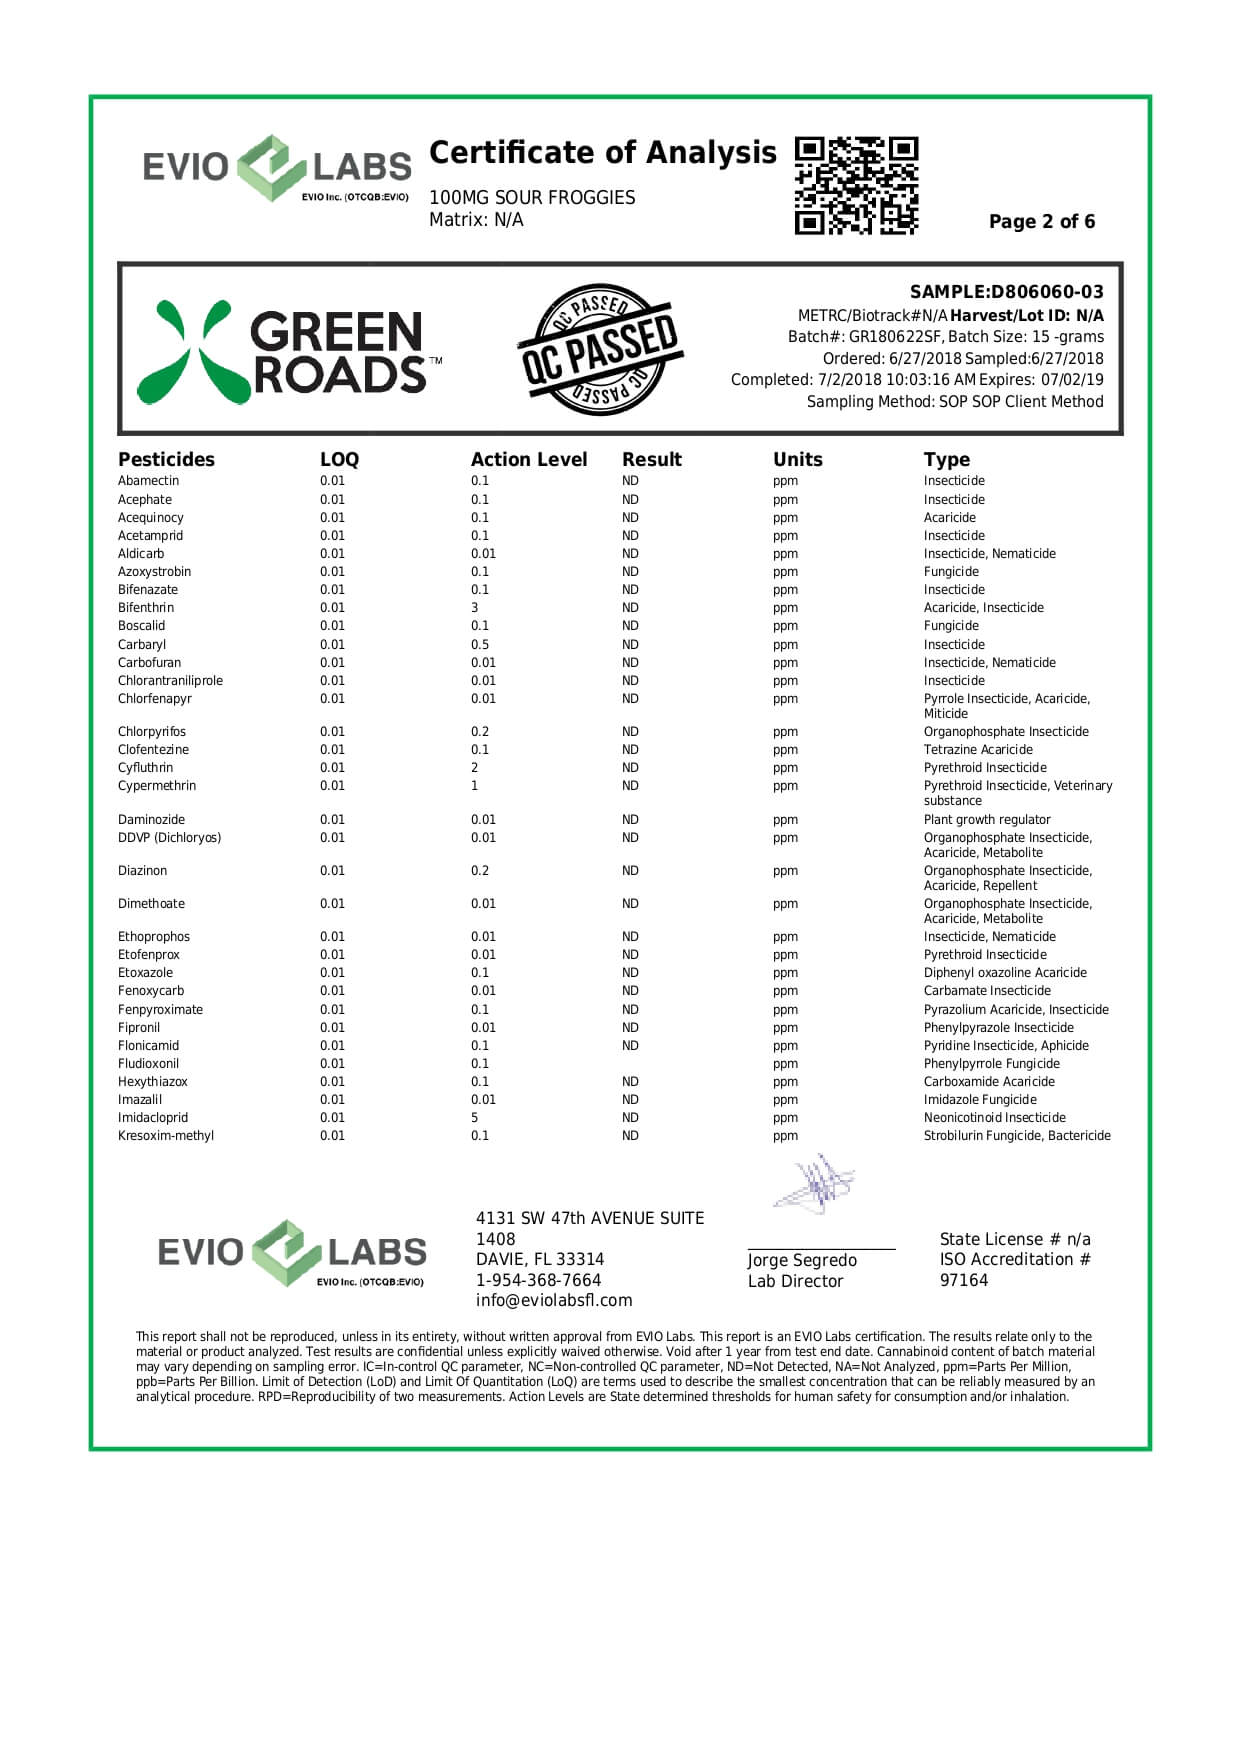 Green Roads CBD Edible Froggies SOURZ 100mg Lab Report